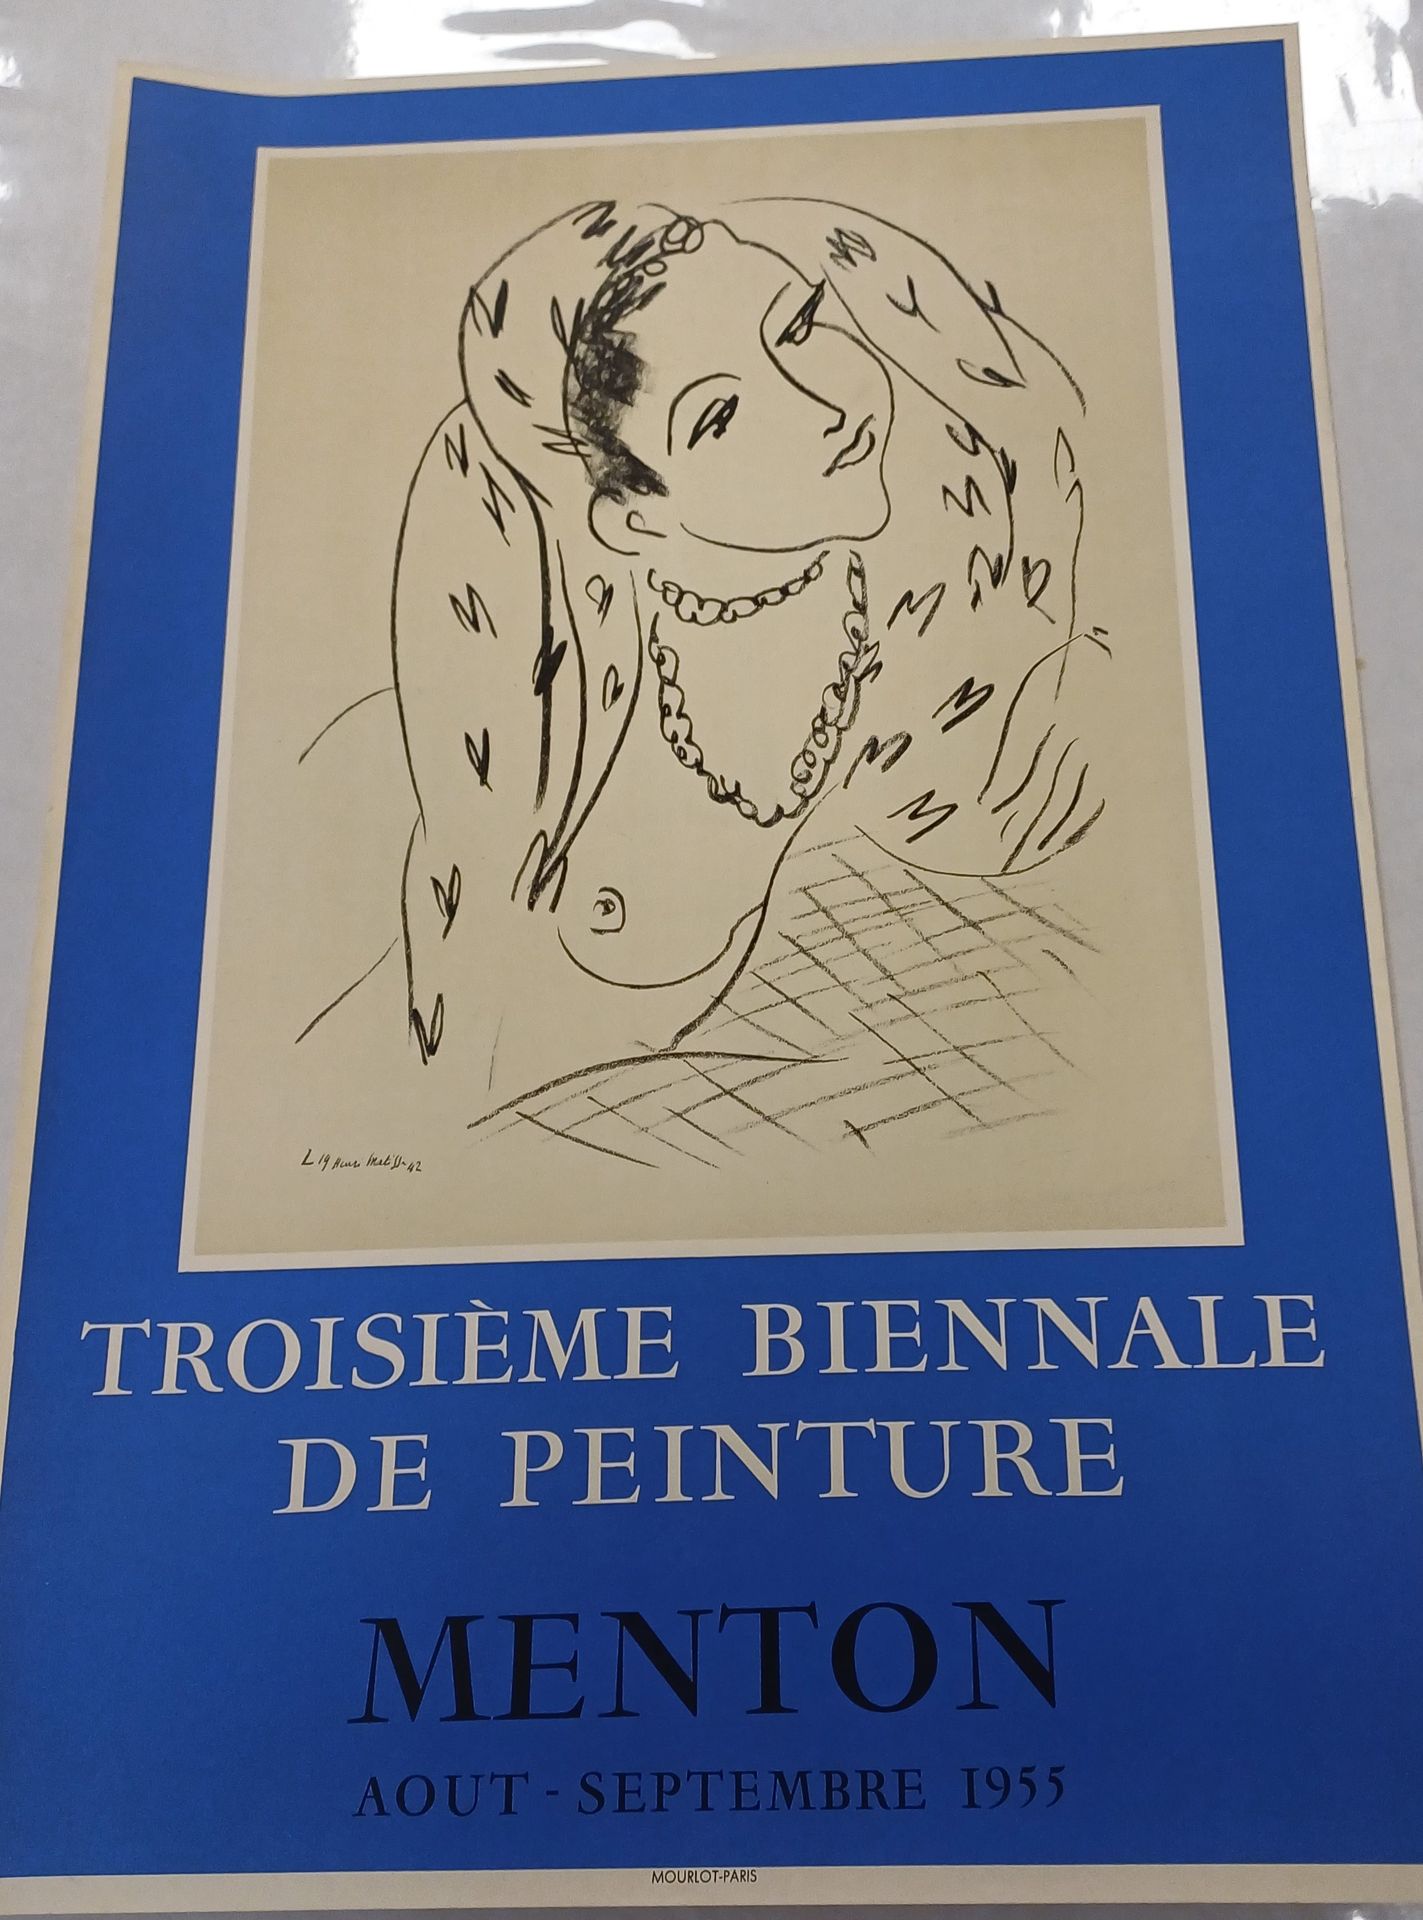 Matisse Affiche Matisse
Menton 1955
59 x 41 cm